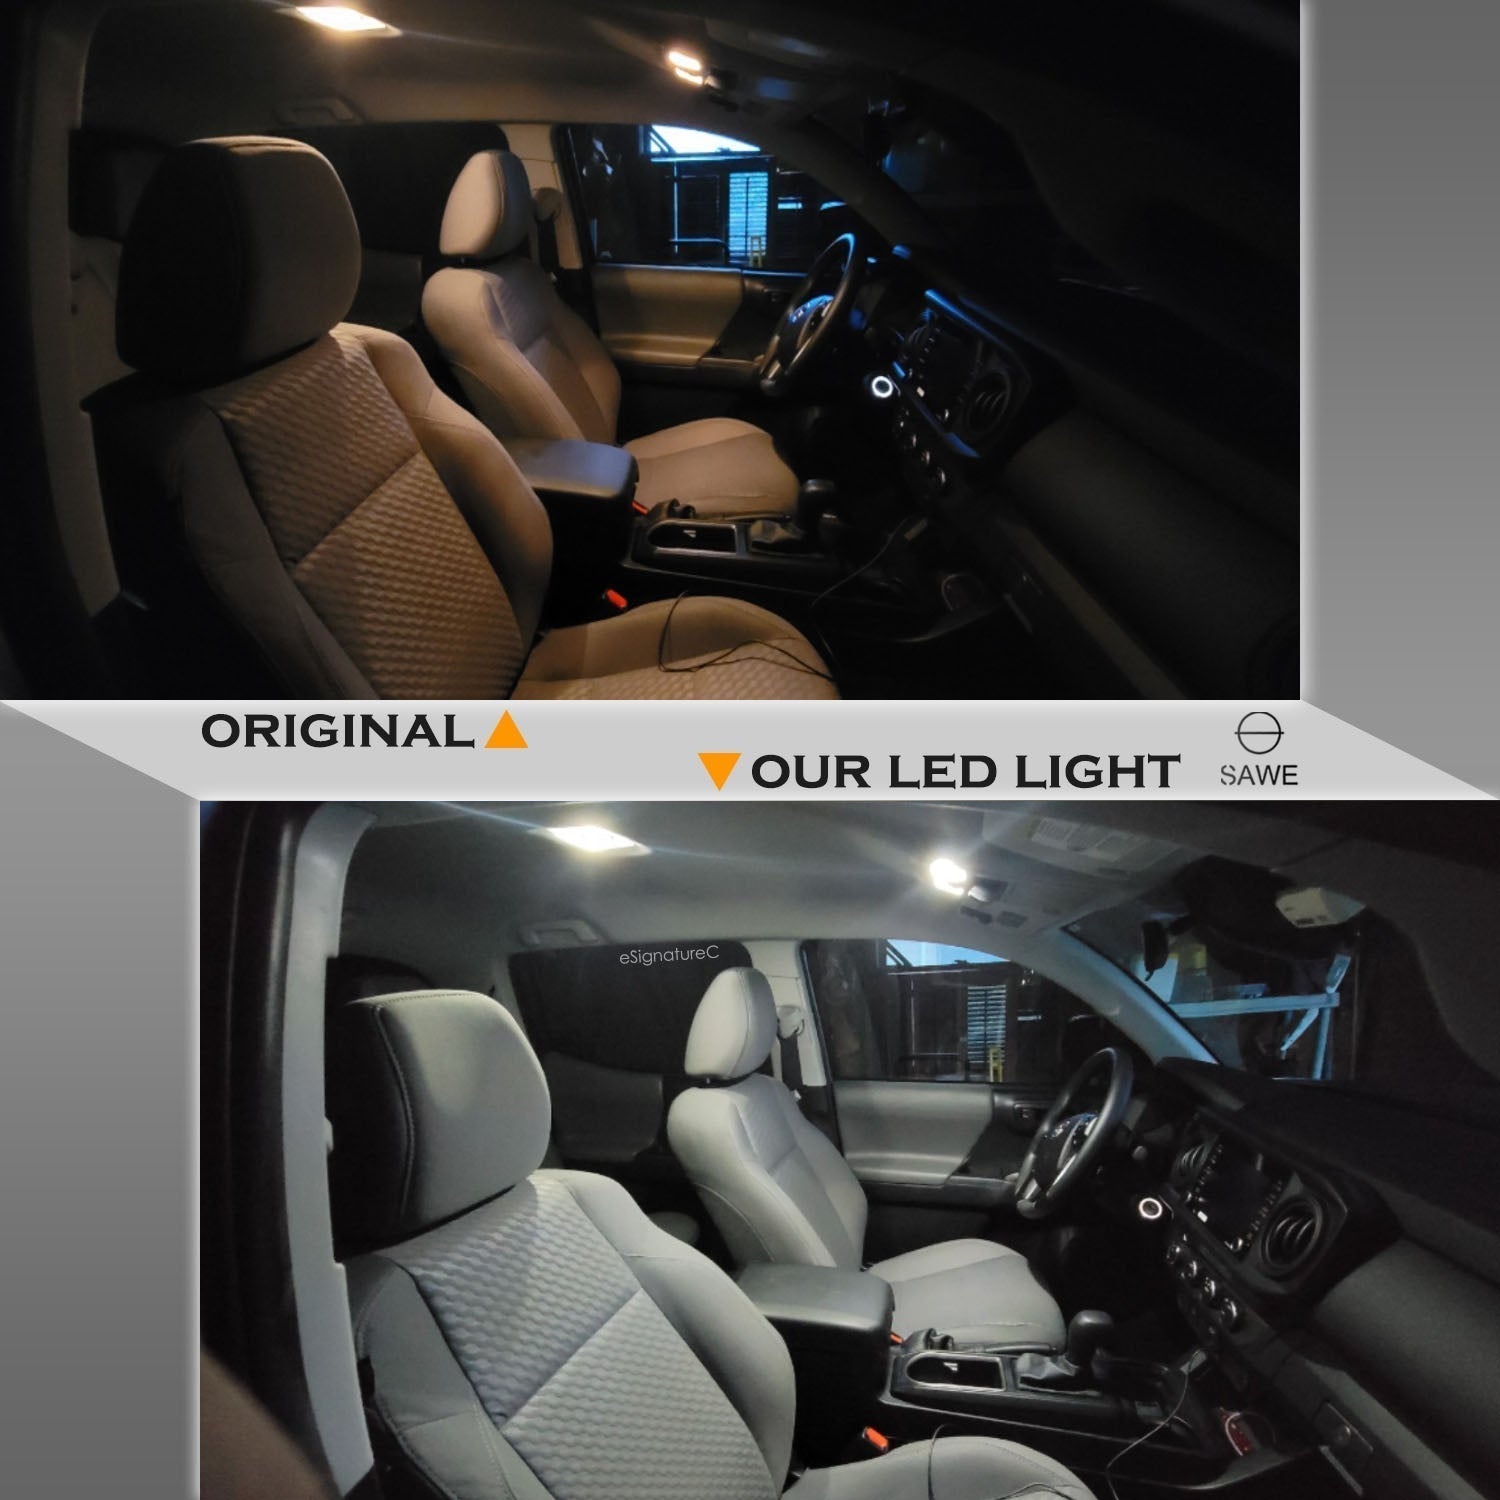 For Honda Prelude Interior LED Lights - Dome & Map Lights Package Kit for 1997 - 2001 - White